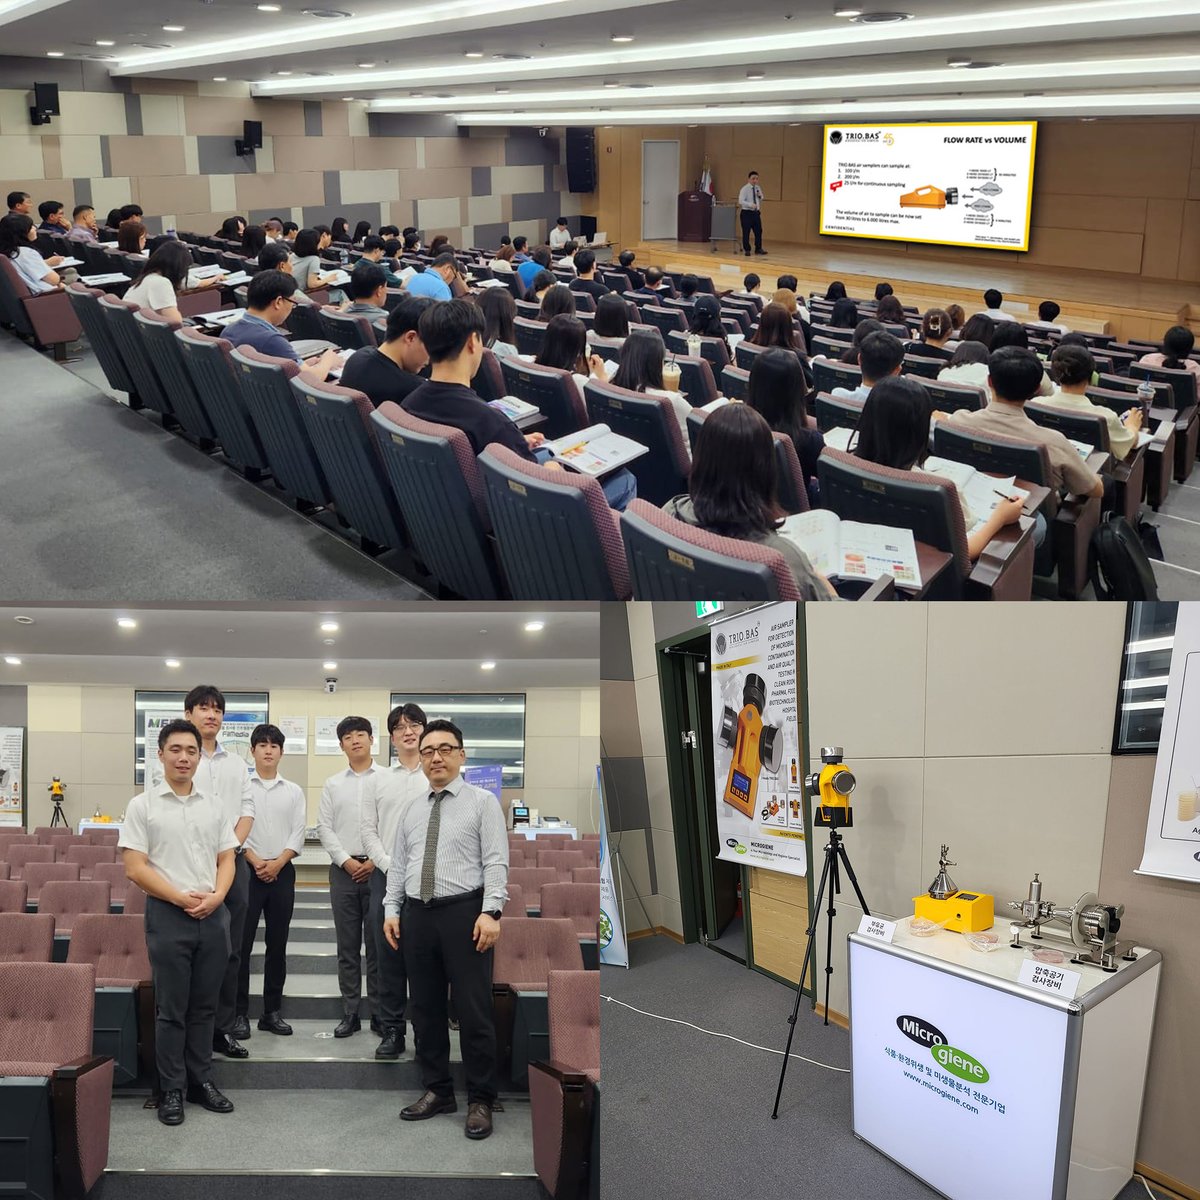 We never stop!
Food Microbial Quality Control Seminar #SouthKorea2023
Link -> ow.ly/e3Nk50PJmGg
-
#triobas #airsampler #activeairsampling #microbiological #environmentalmonitoring